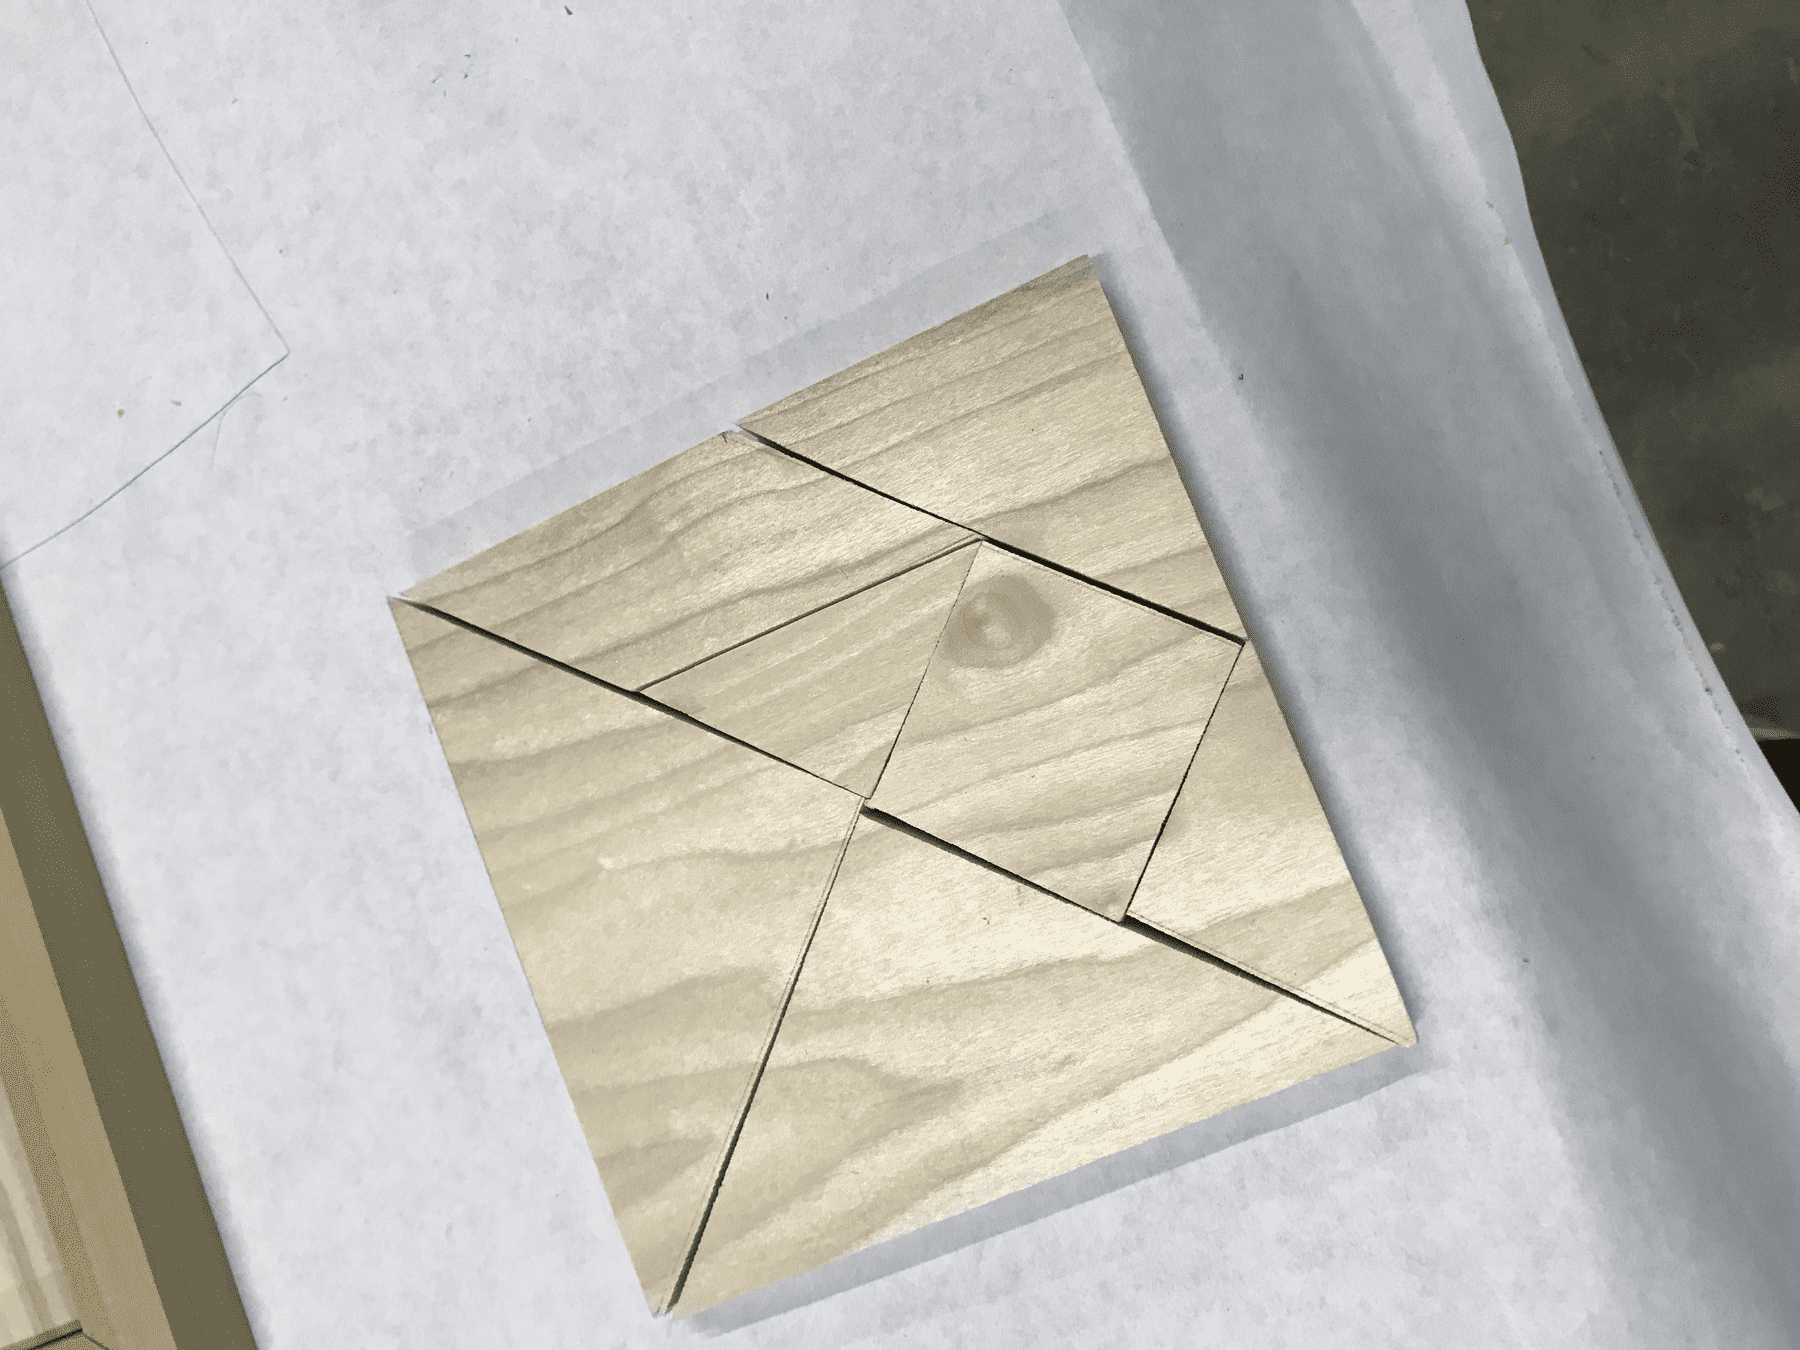 The tangram pieces